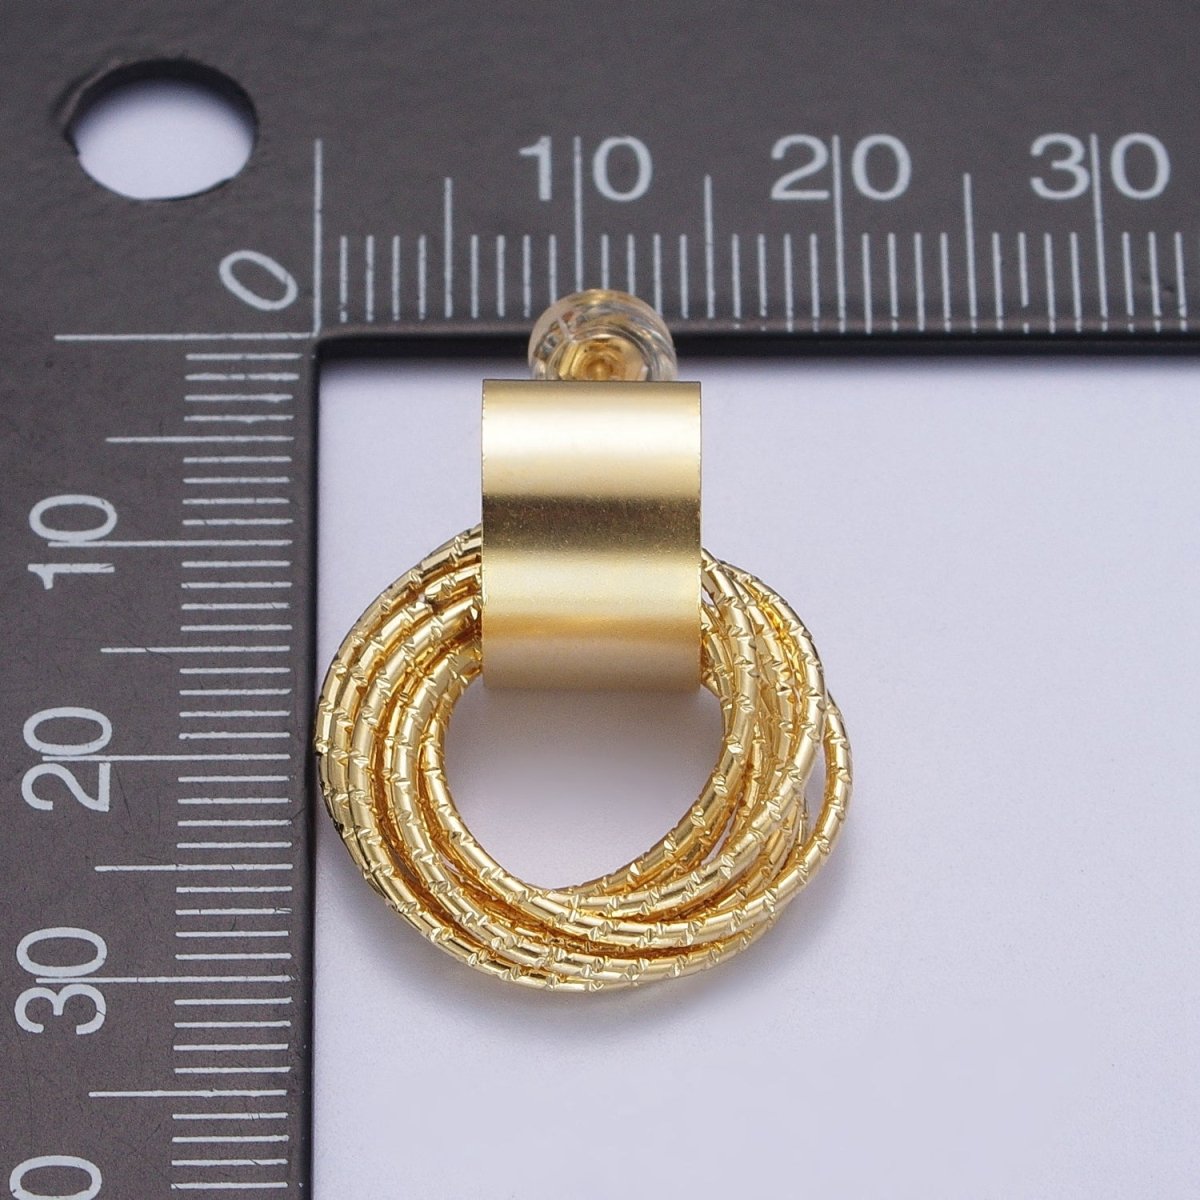 Gold Round Textured Chain Wreath Geometric Stud Earrings | AE1040 - DLUXCA